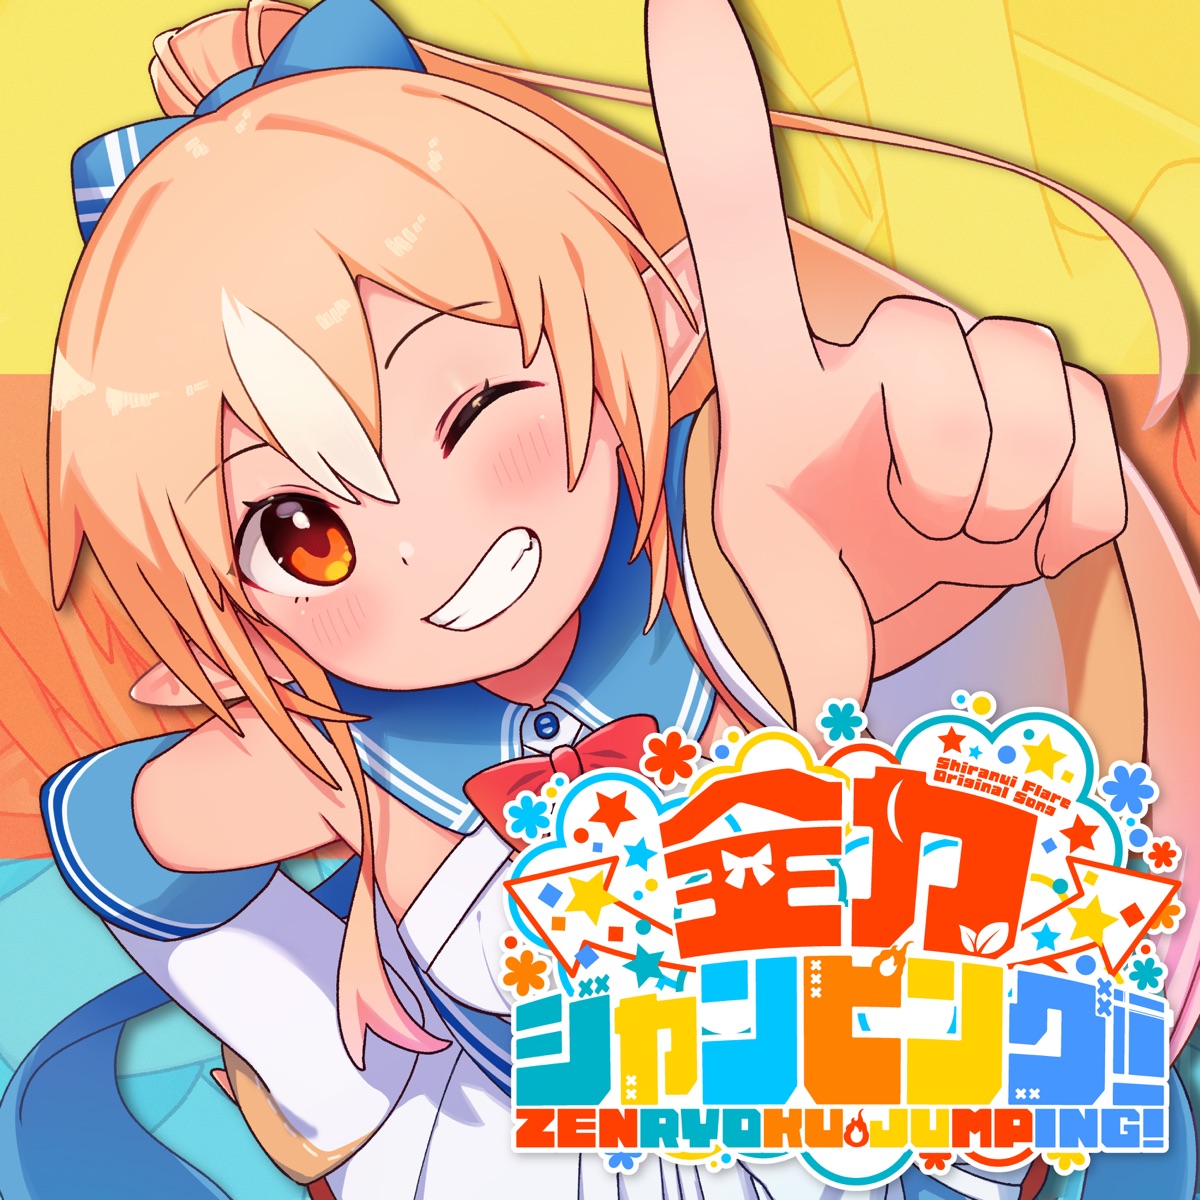 Cover art for『Shiranui Flare - Zenryoku Jumping!』from the release『Zenryoku Jumping!』